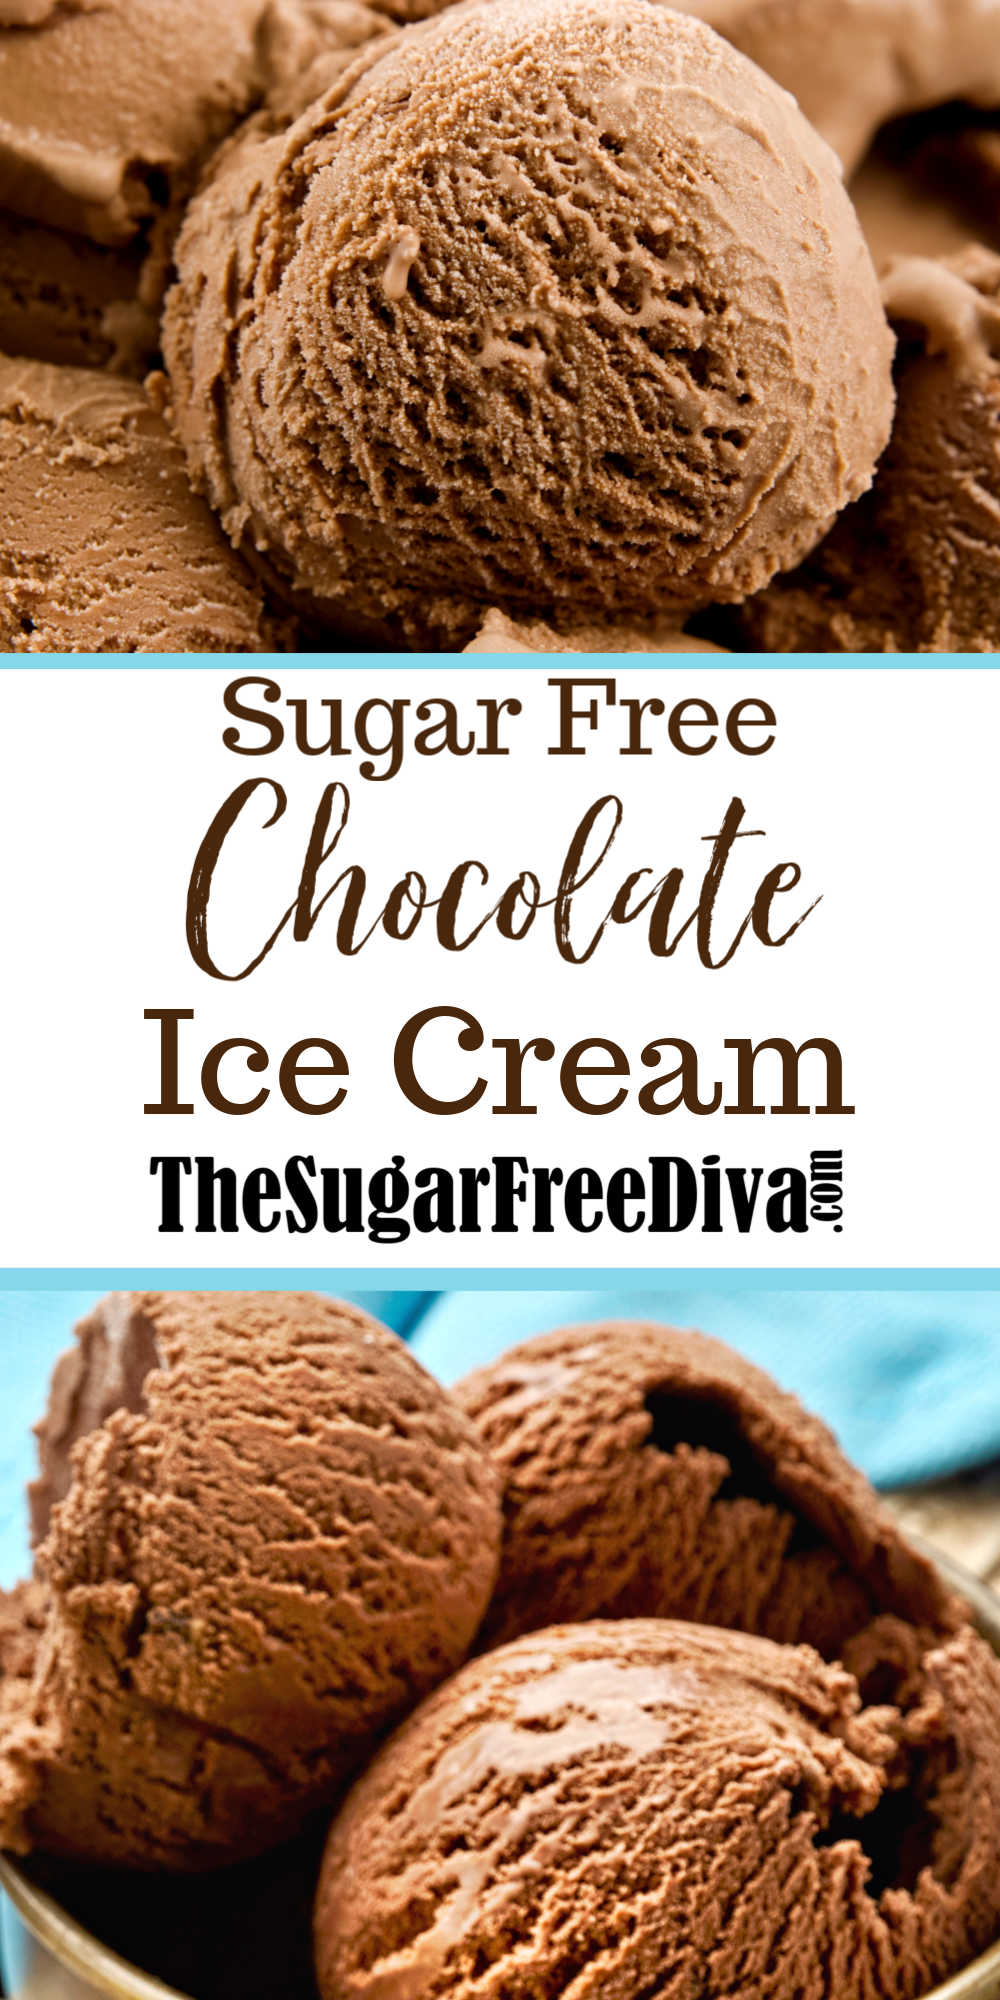 Homemade Sugar Free Chocolate Ice Cream